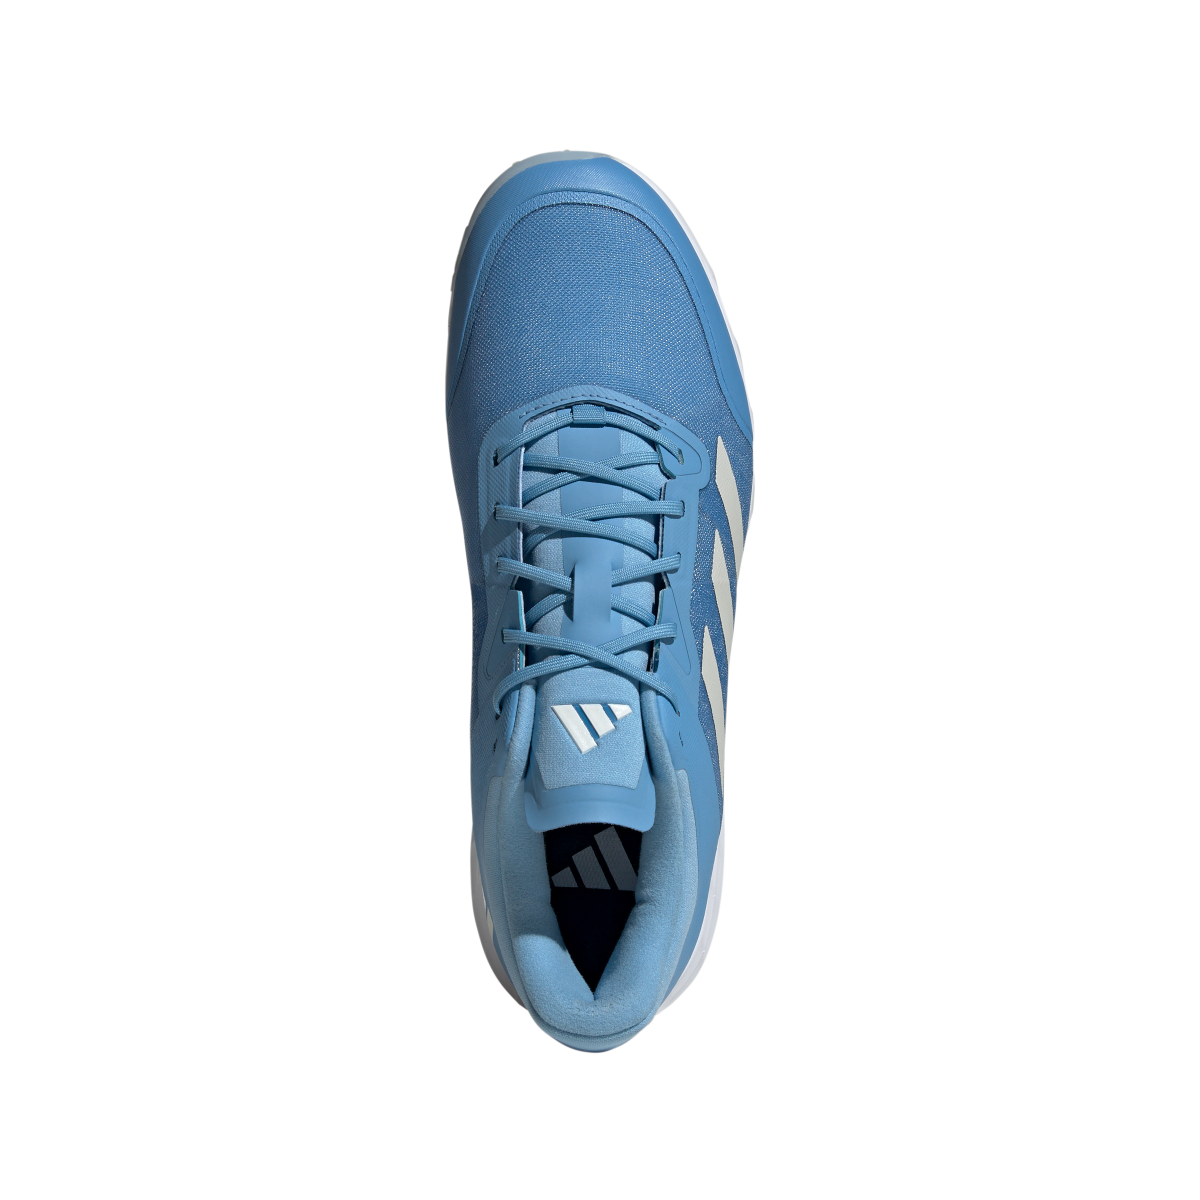 Adidas Lux 2.2S Hockey Shoe Blue - ONE Sports Warehouse